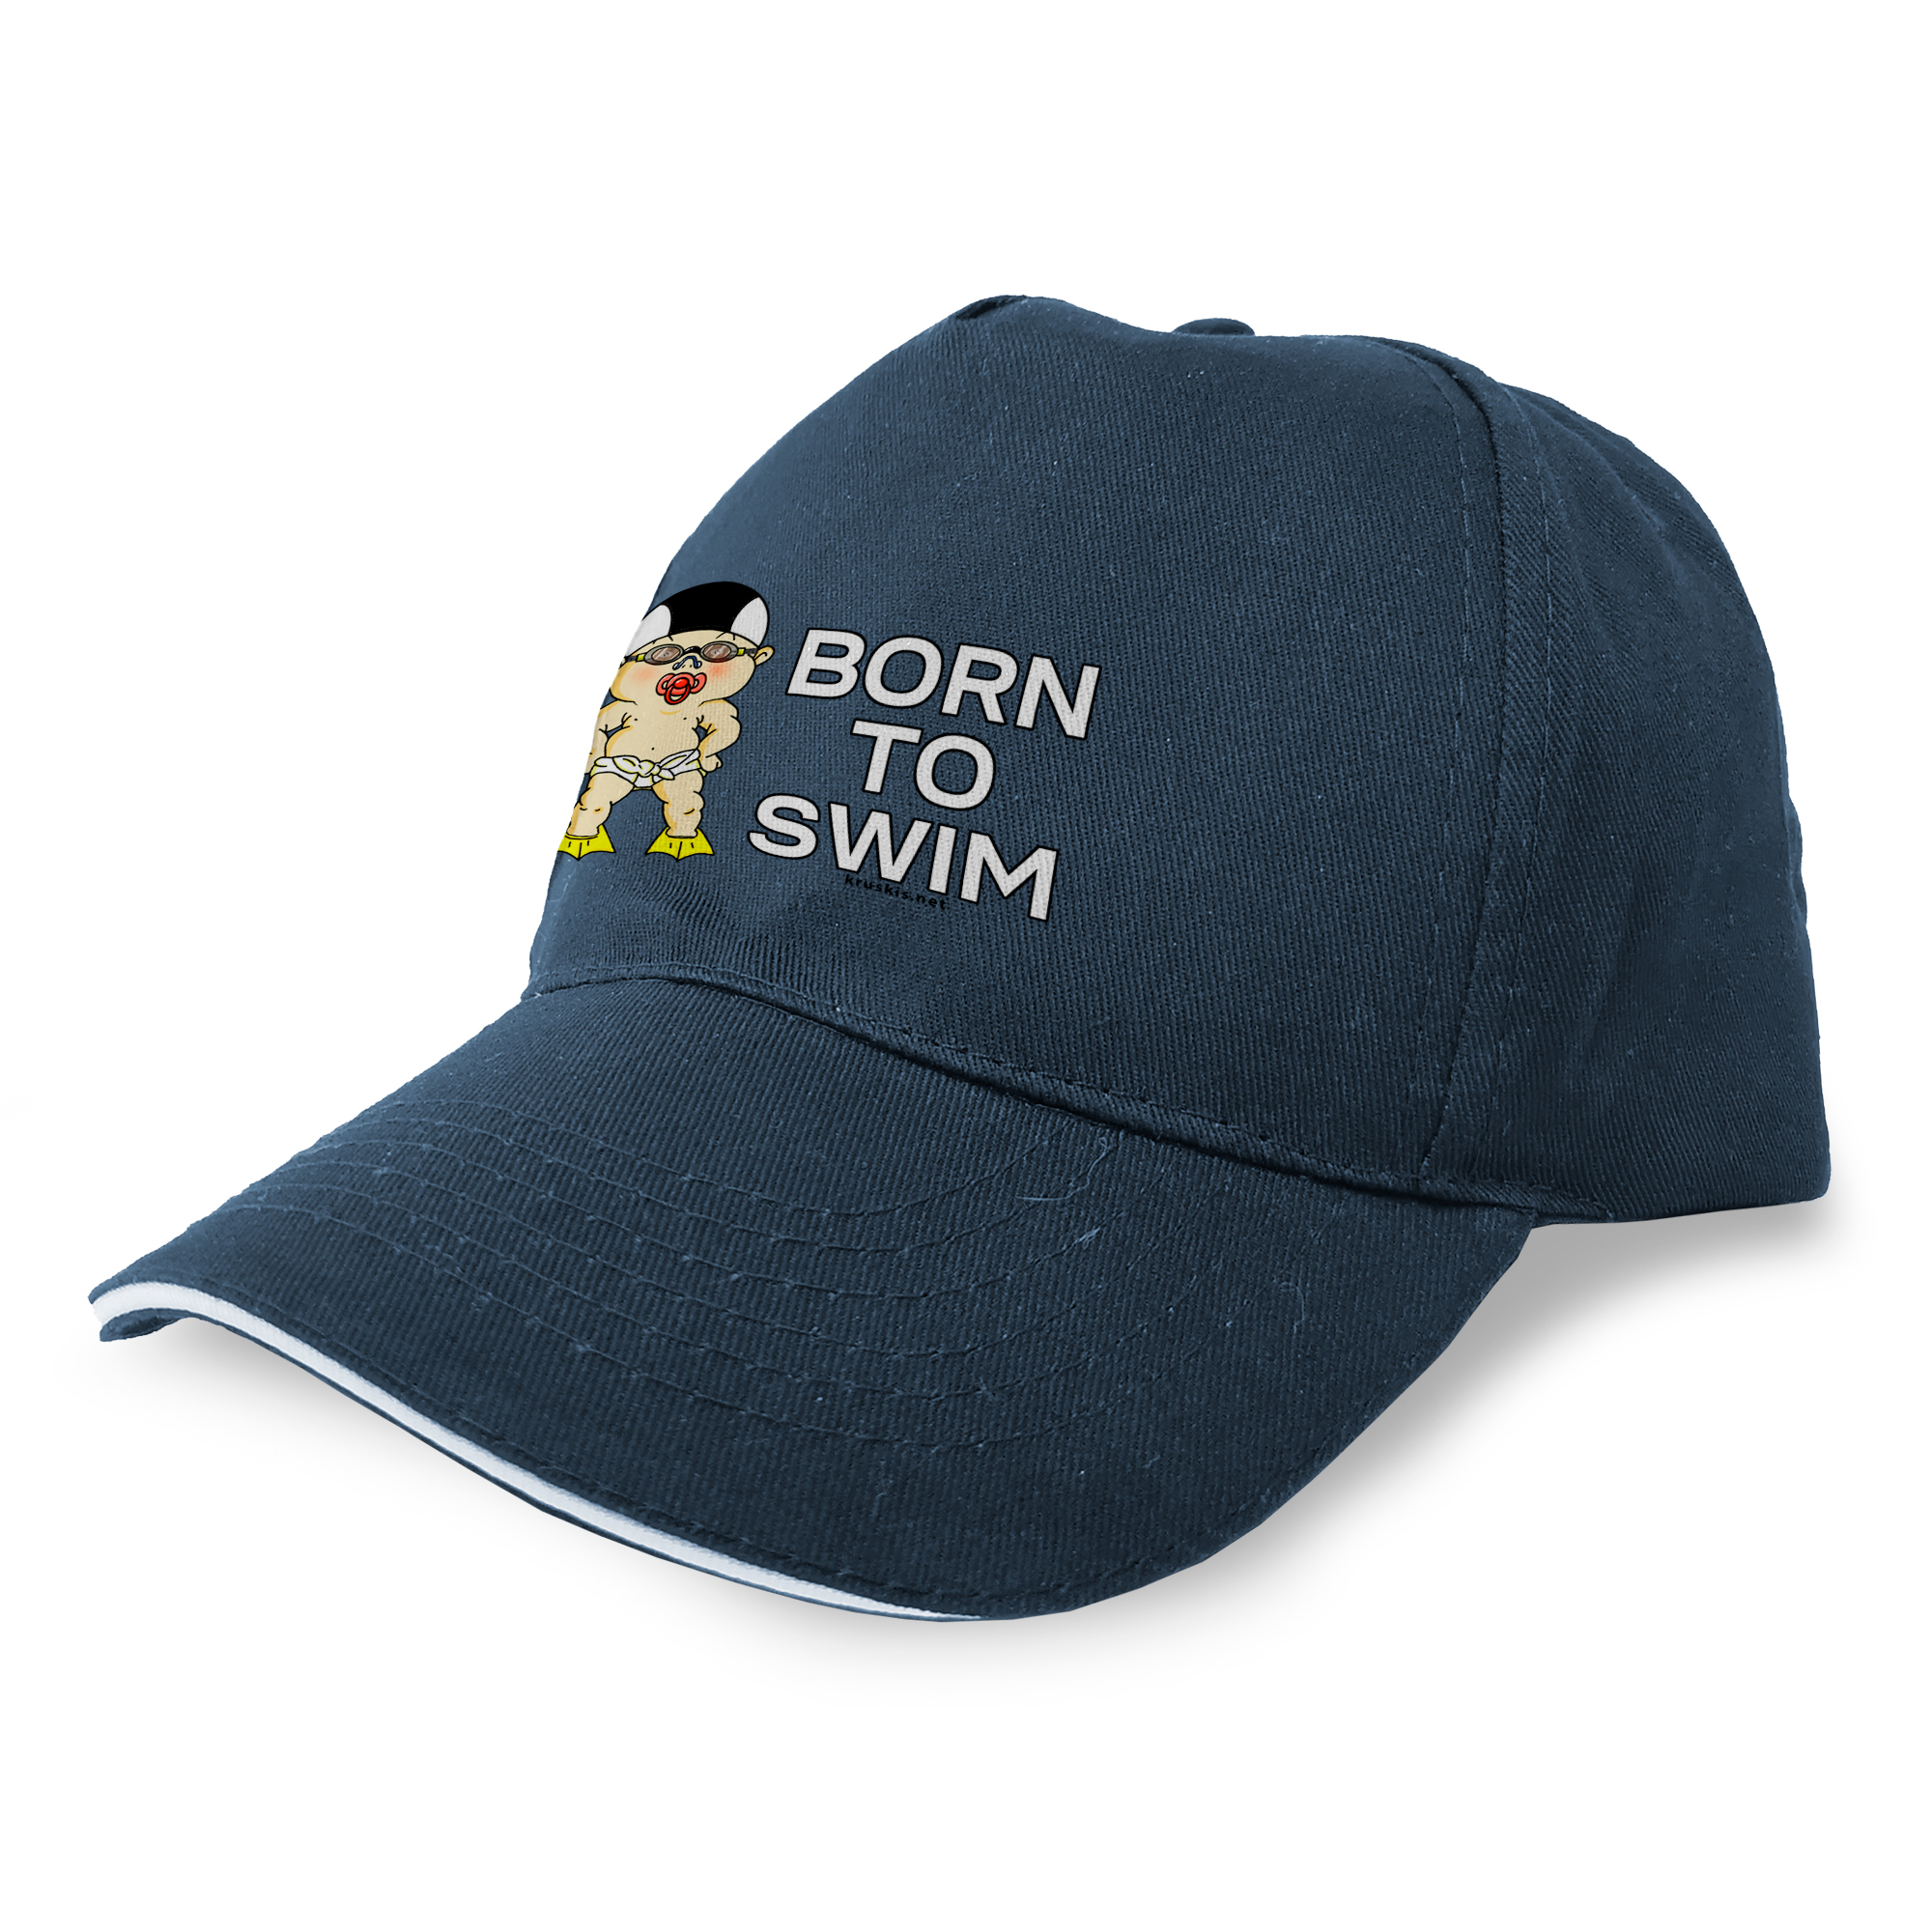 Gorra Natacion Born to Swim Unisex